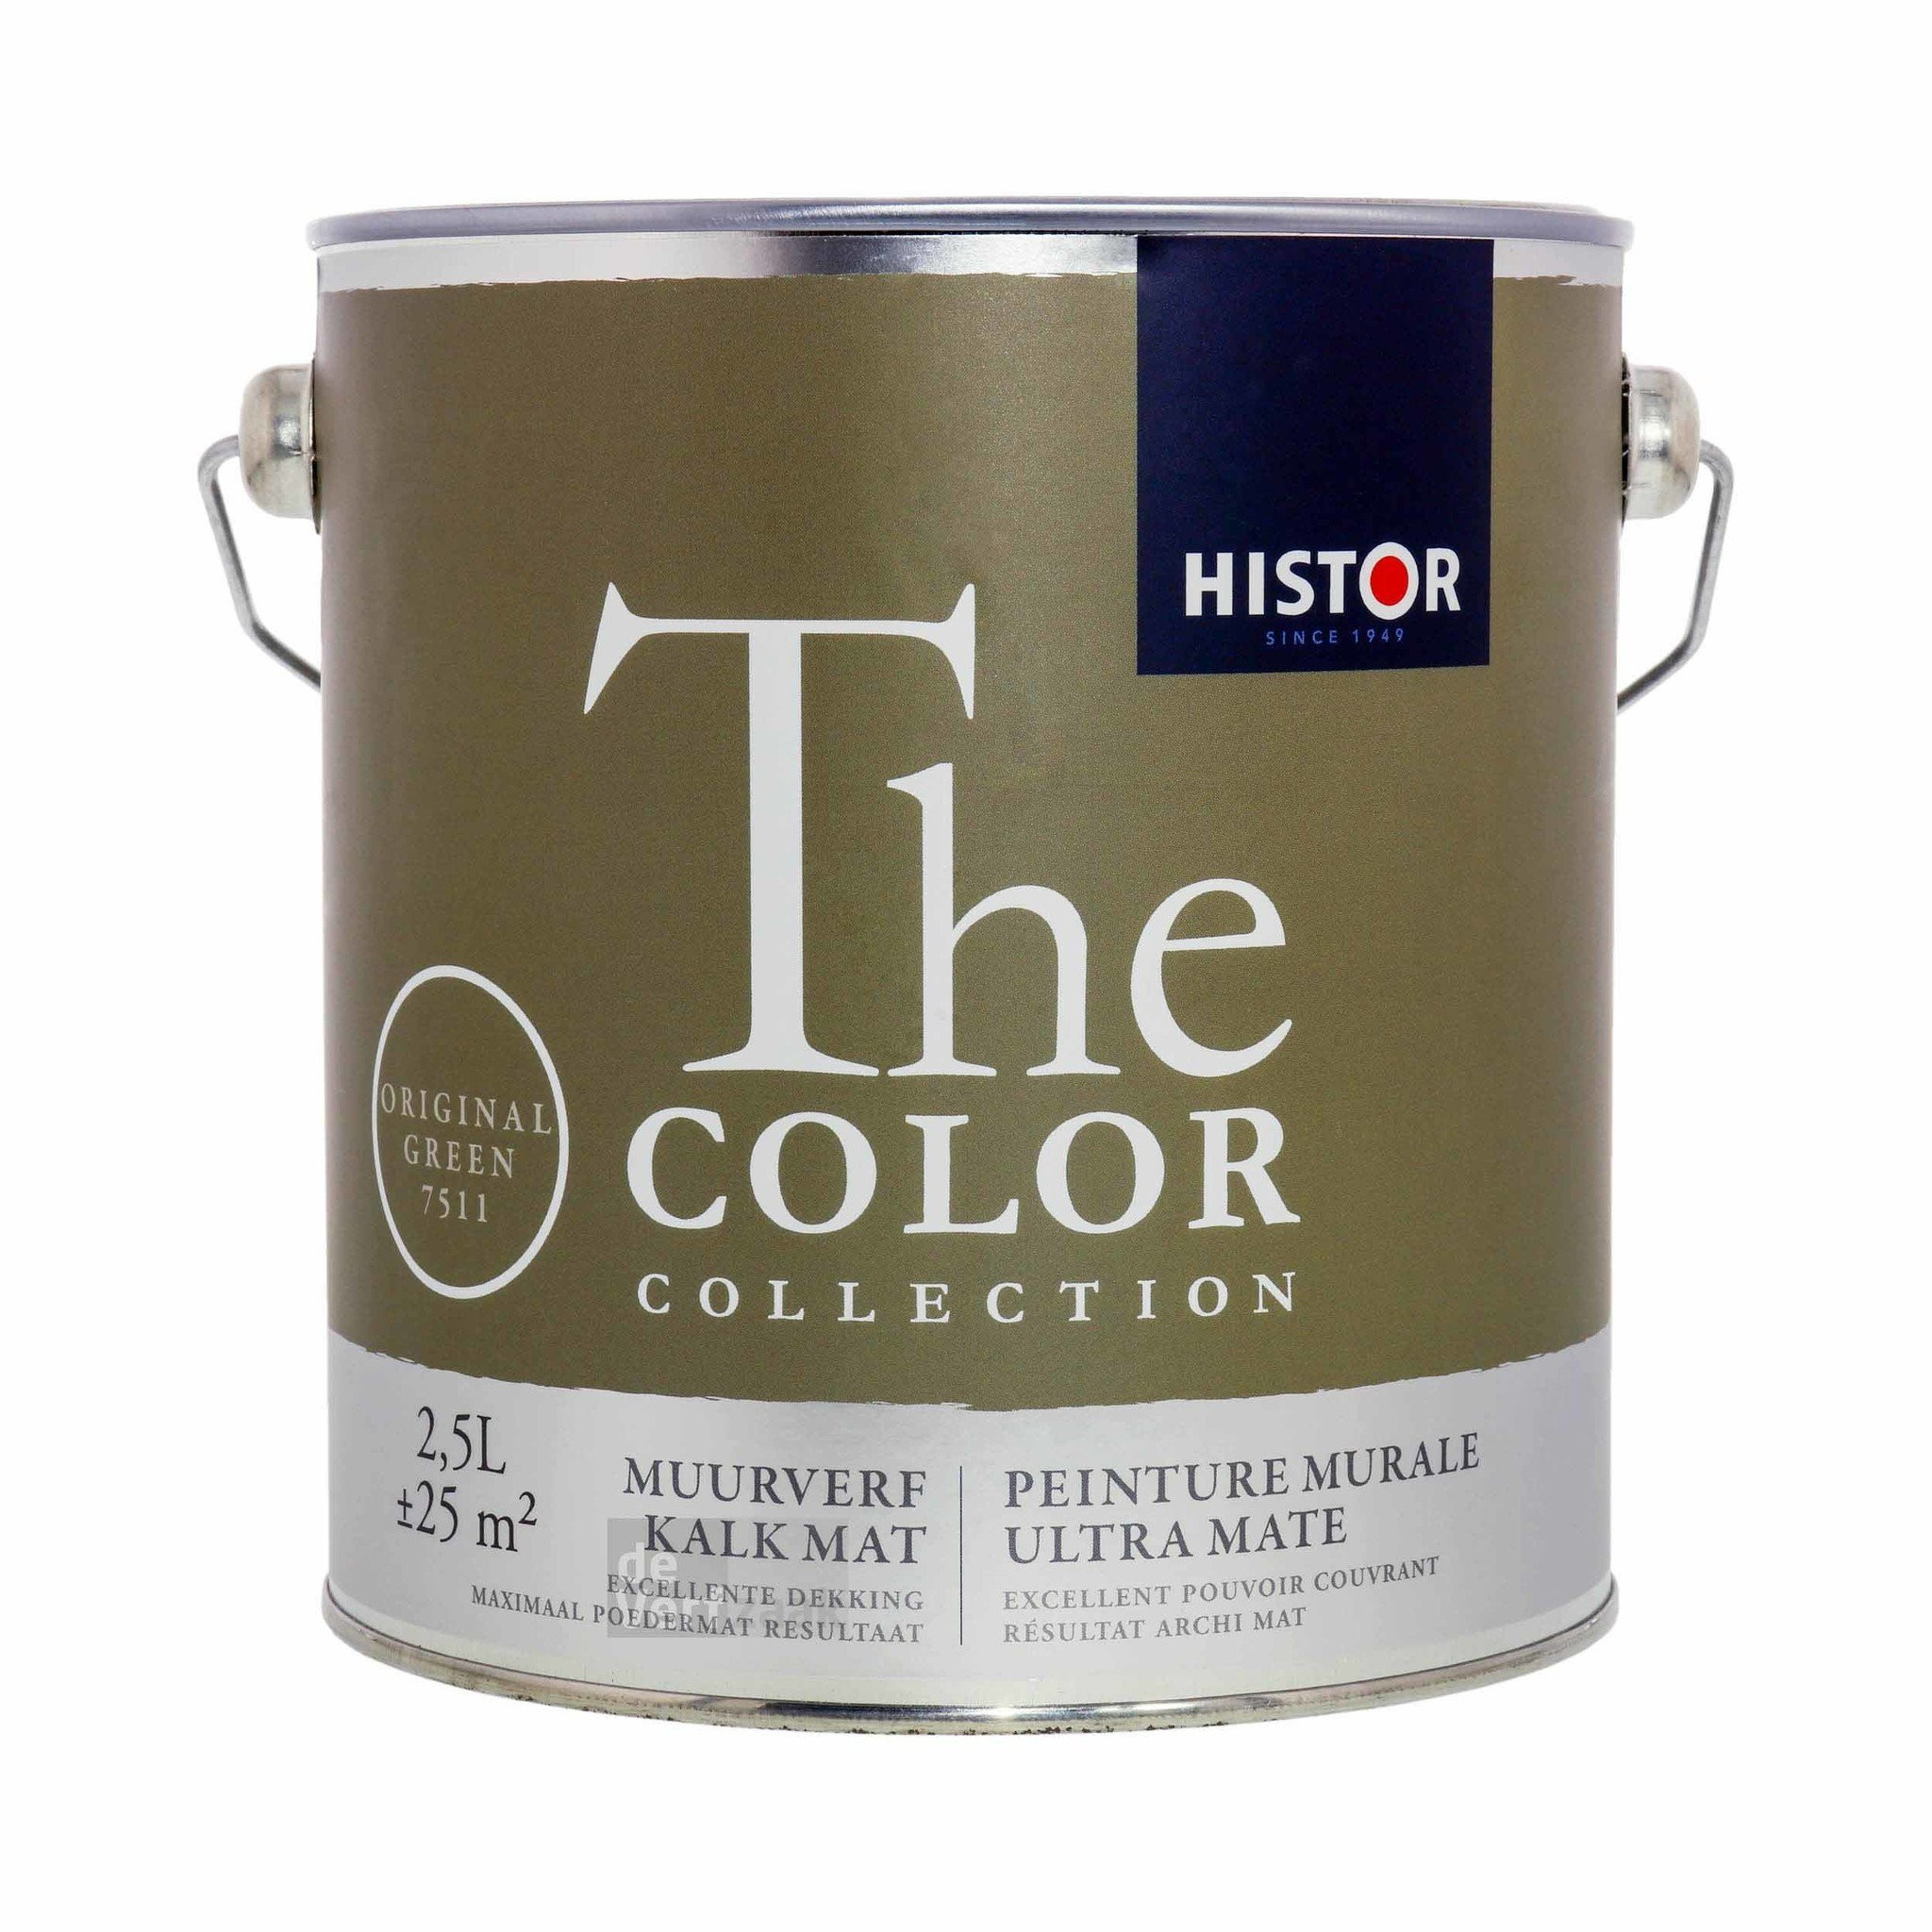 Histor The Color Collection Muurverf Kalkmat - Original Green - 2,5 liter